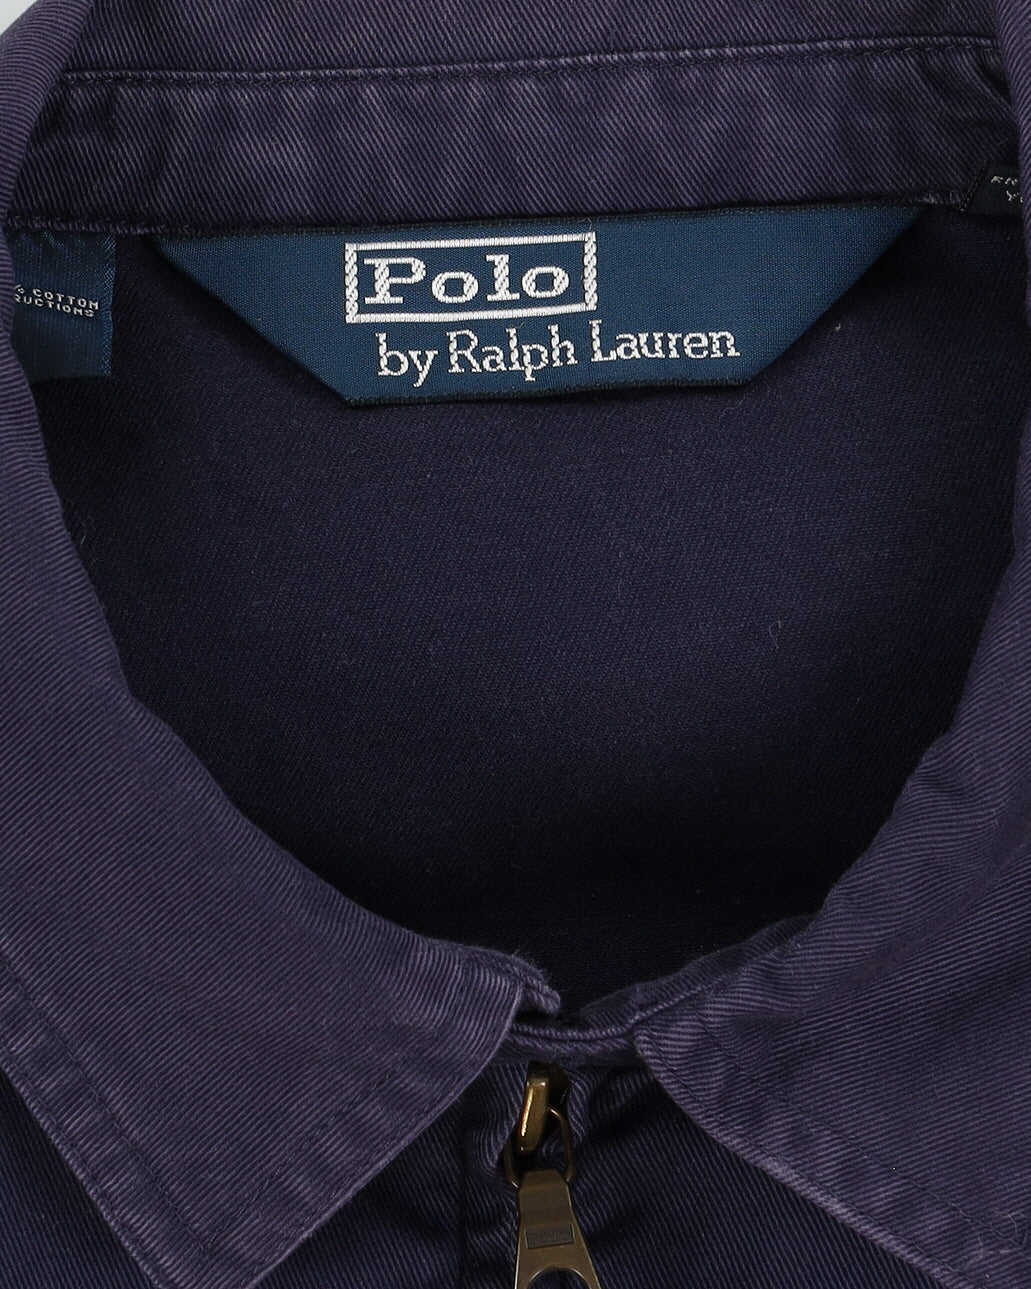 Vintage 90s Ralph Lauren Harrington Jacket - M